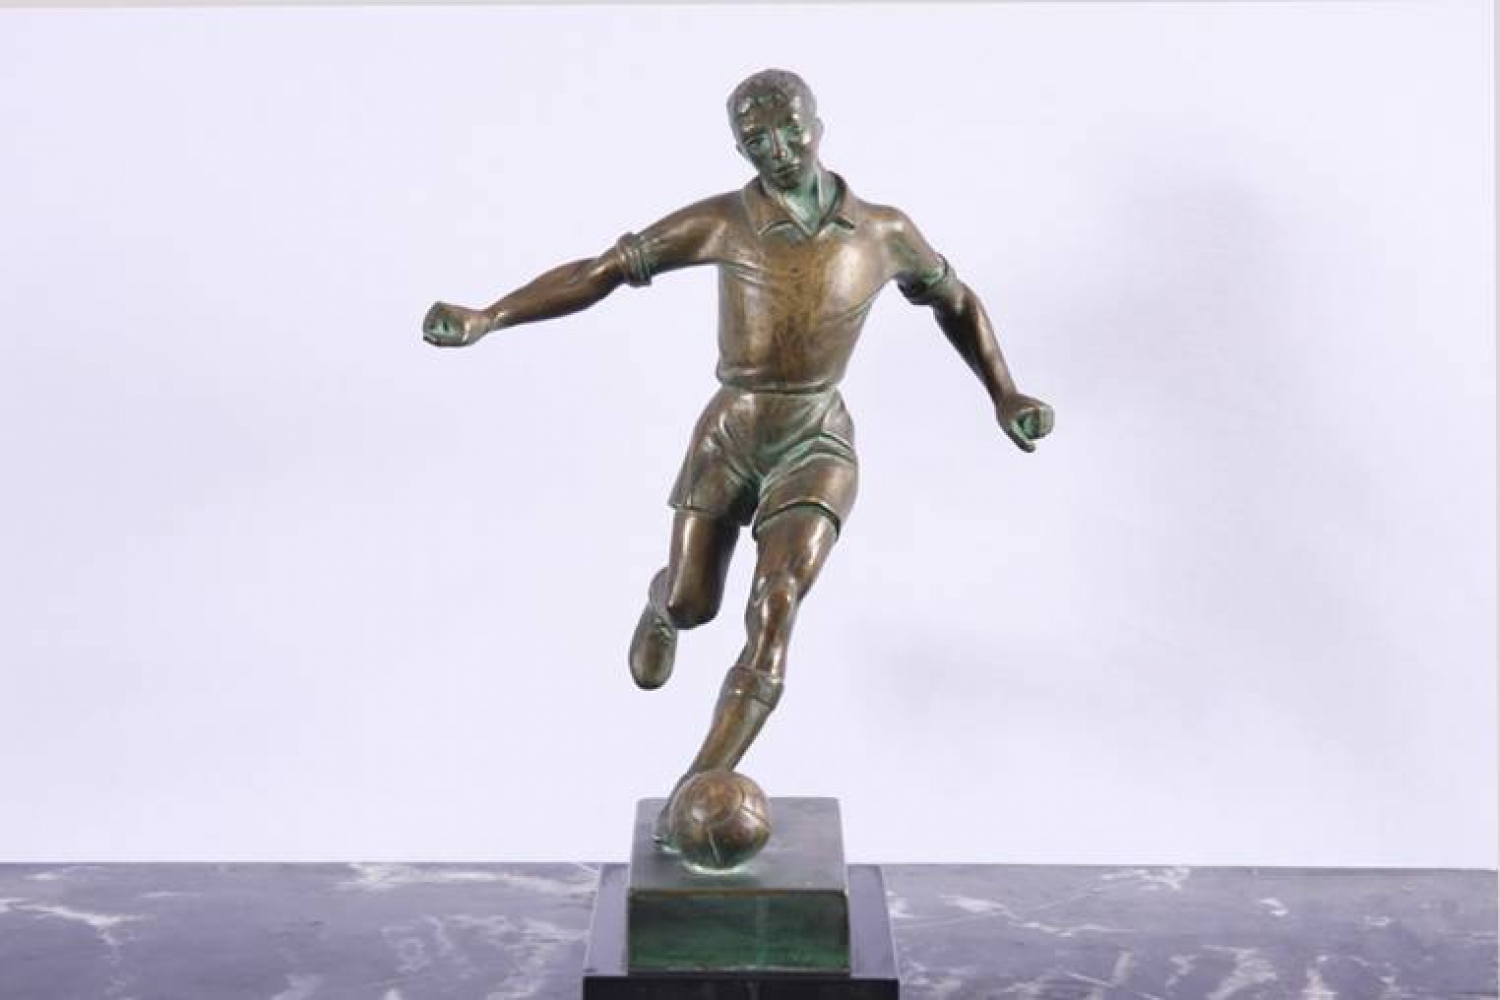 Statue of Footballer